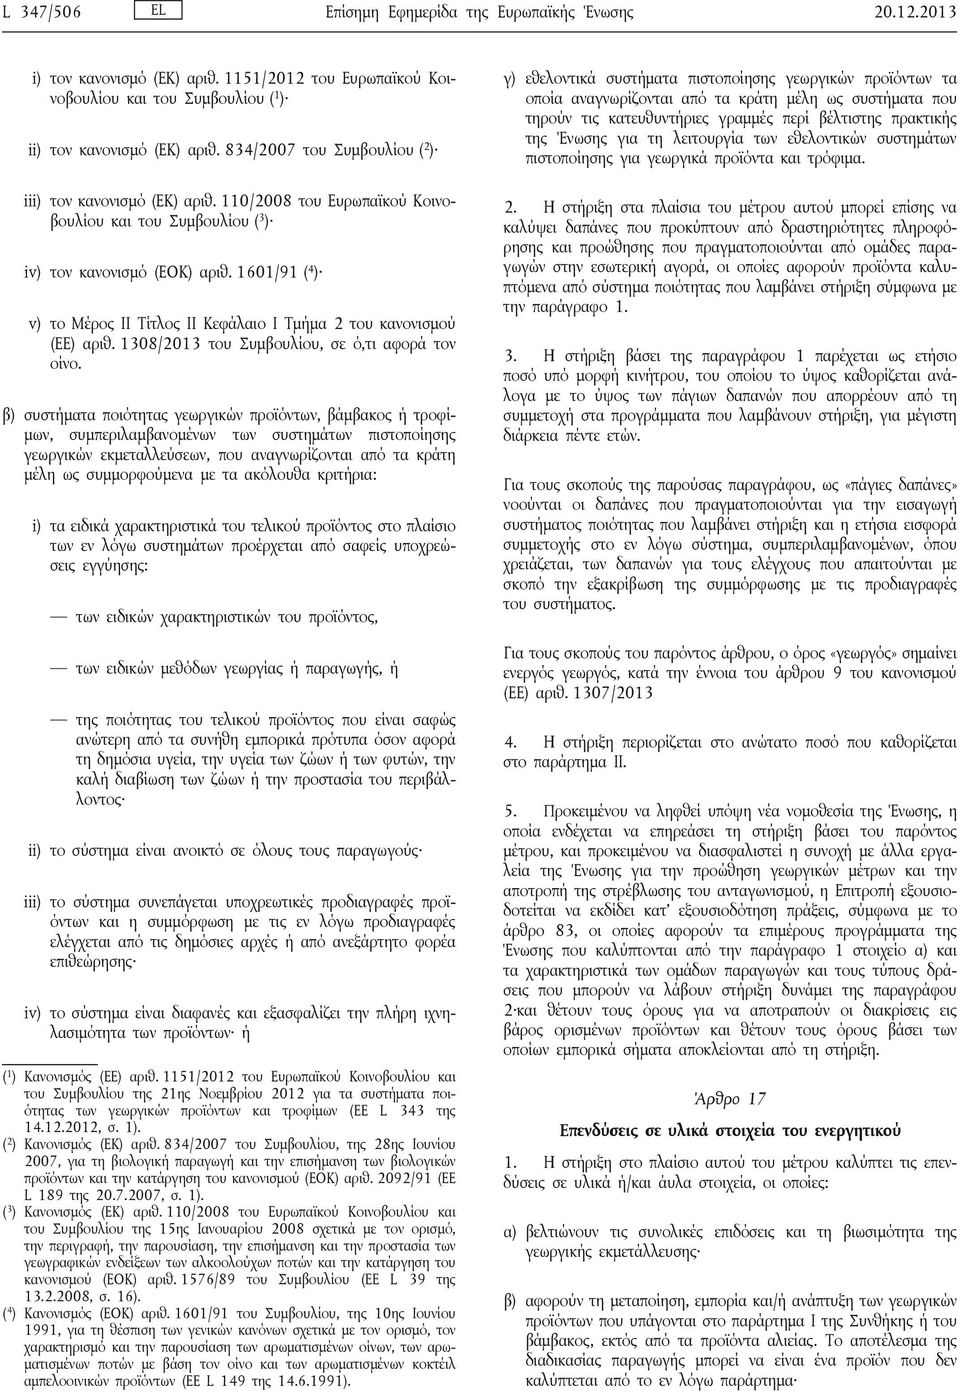 1601/91 ( 4 ) v) το Μέρος II Τίτλος II Κεφάλαιο I Τμήμα 2 του κανονισμού (ΕΕ) αριθ. 1308/2013 του Συμβουλίου, σε ό,τι αφορά τον οίνο.